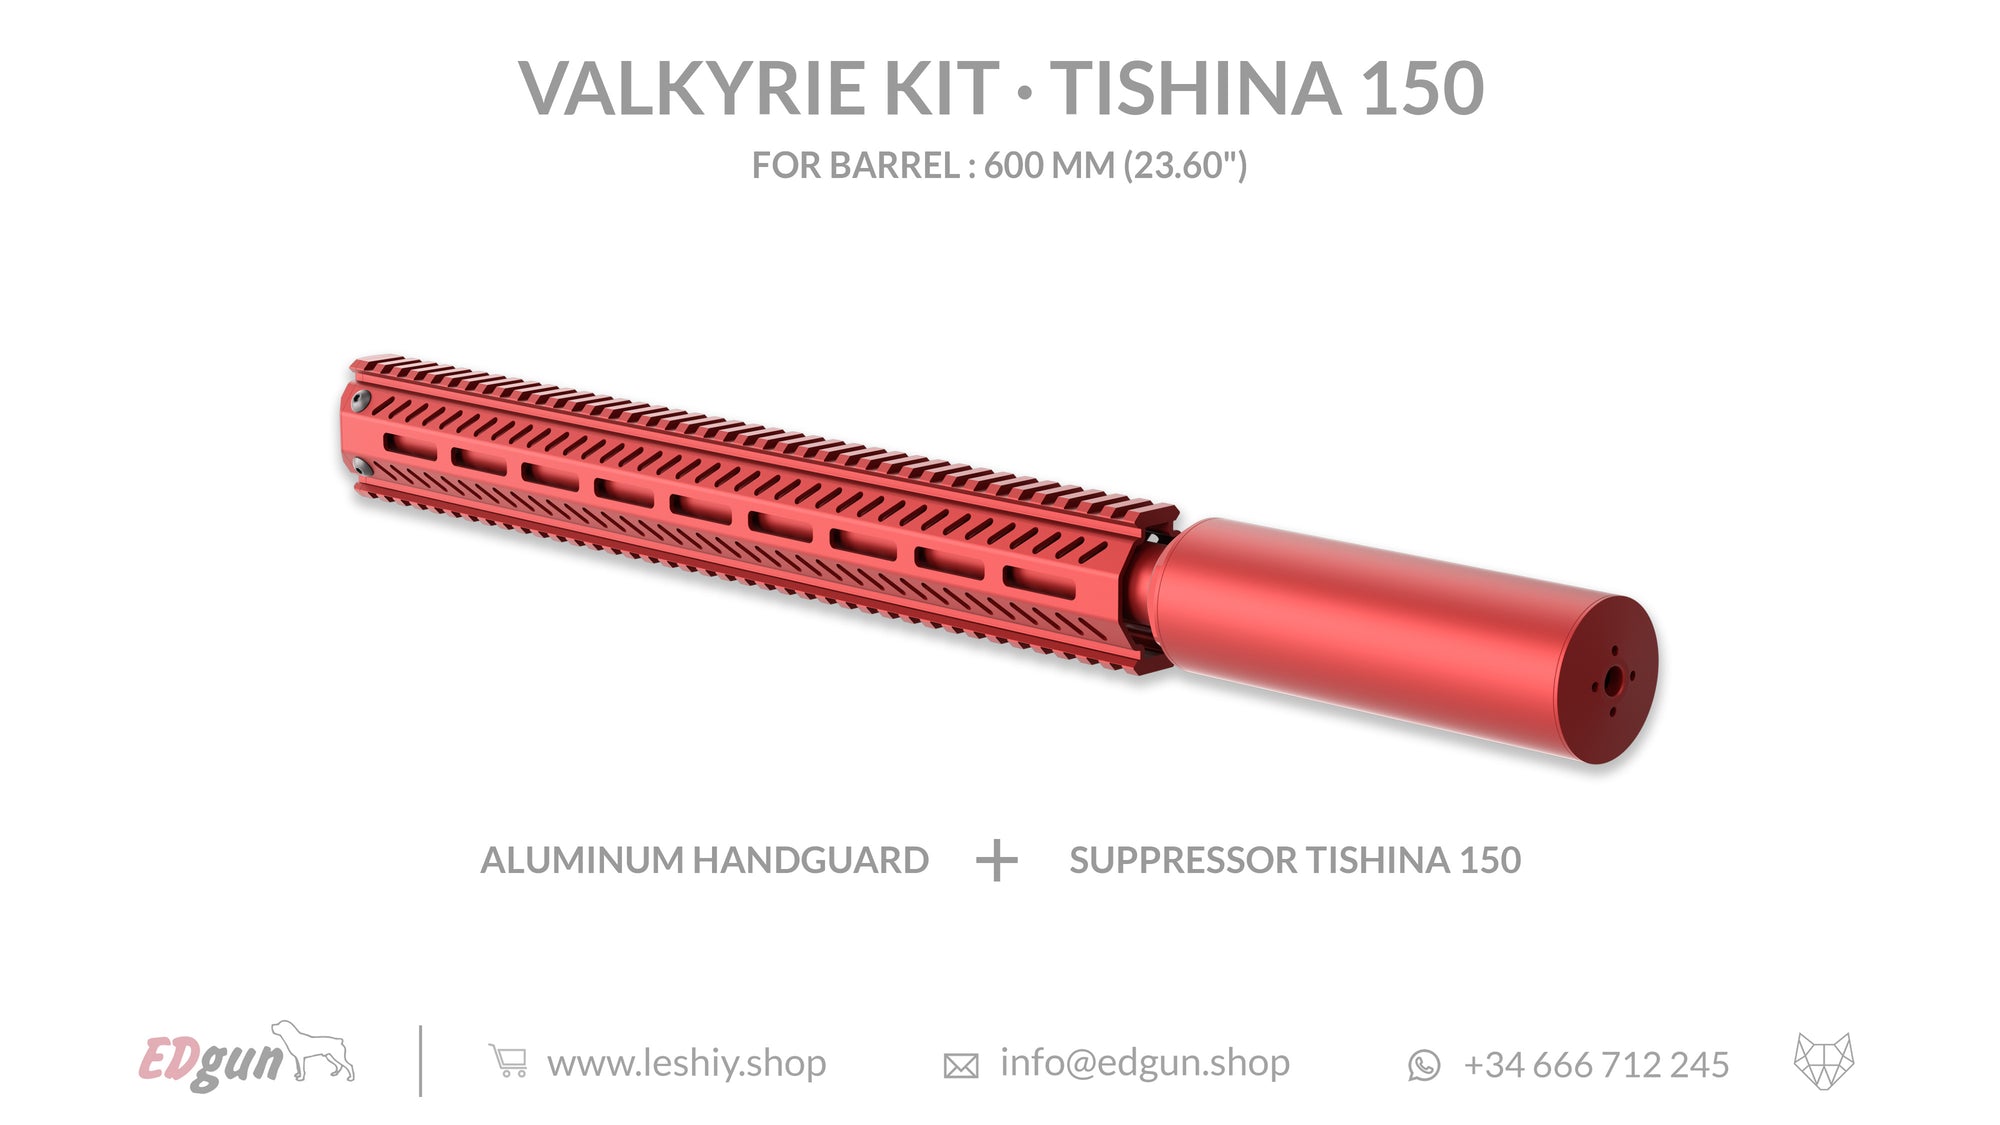 Valkyrie Kit Tishina 150 for barrel 600mm (23.60¨)